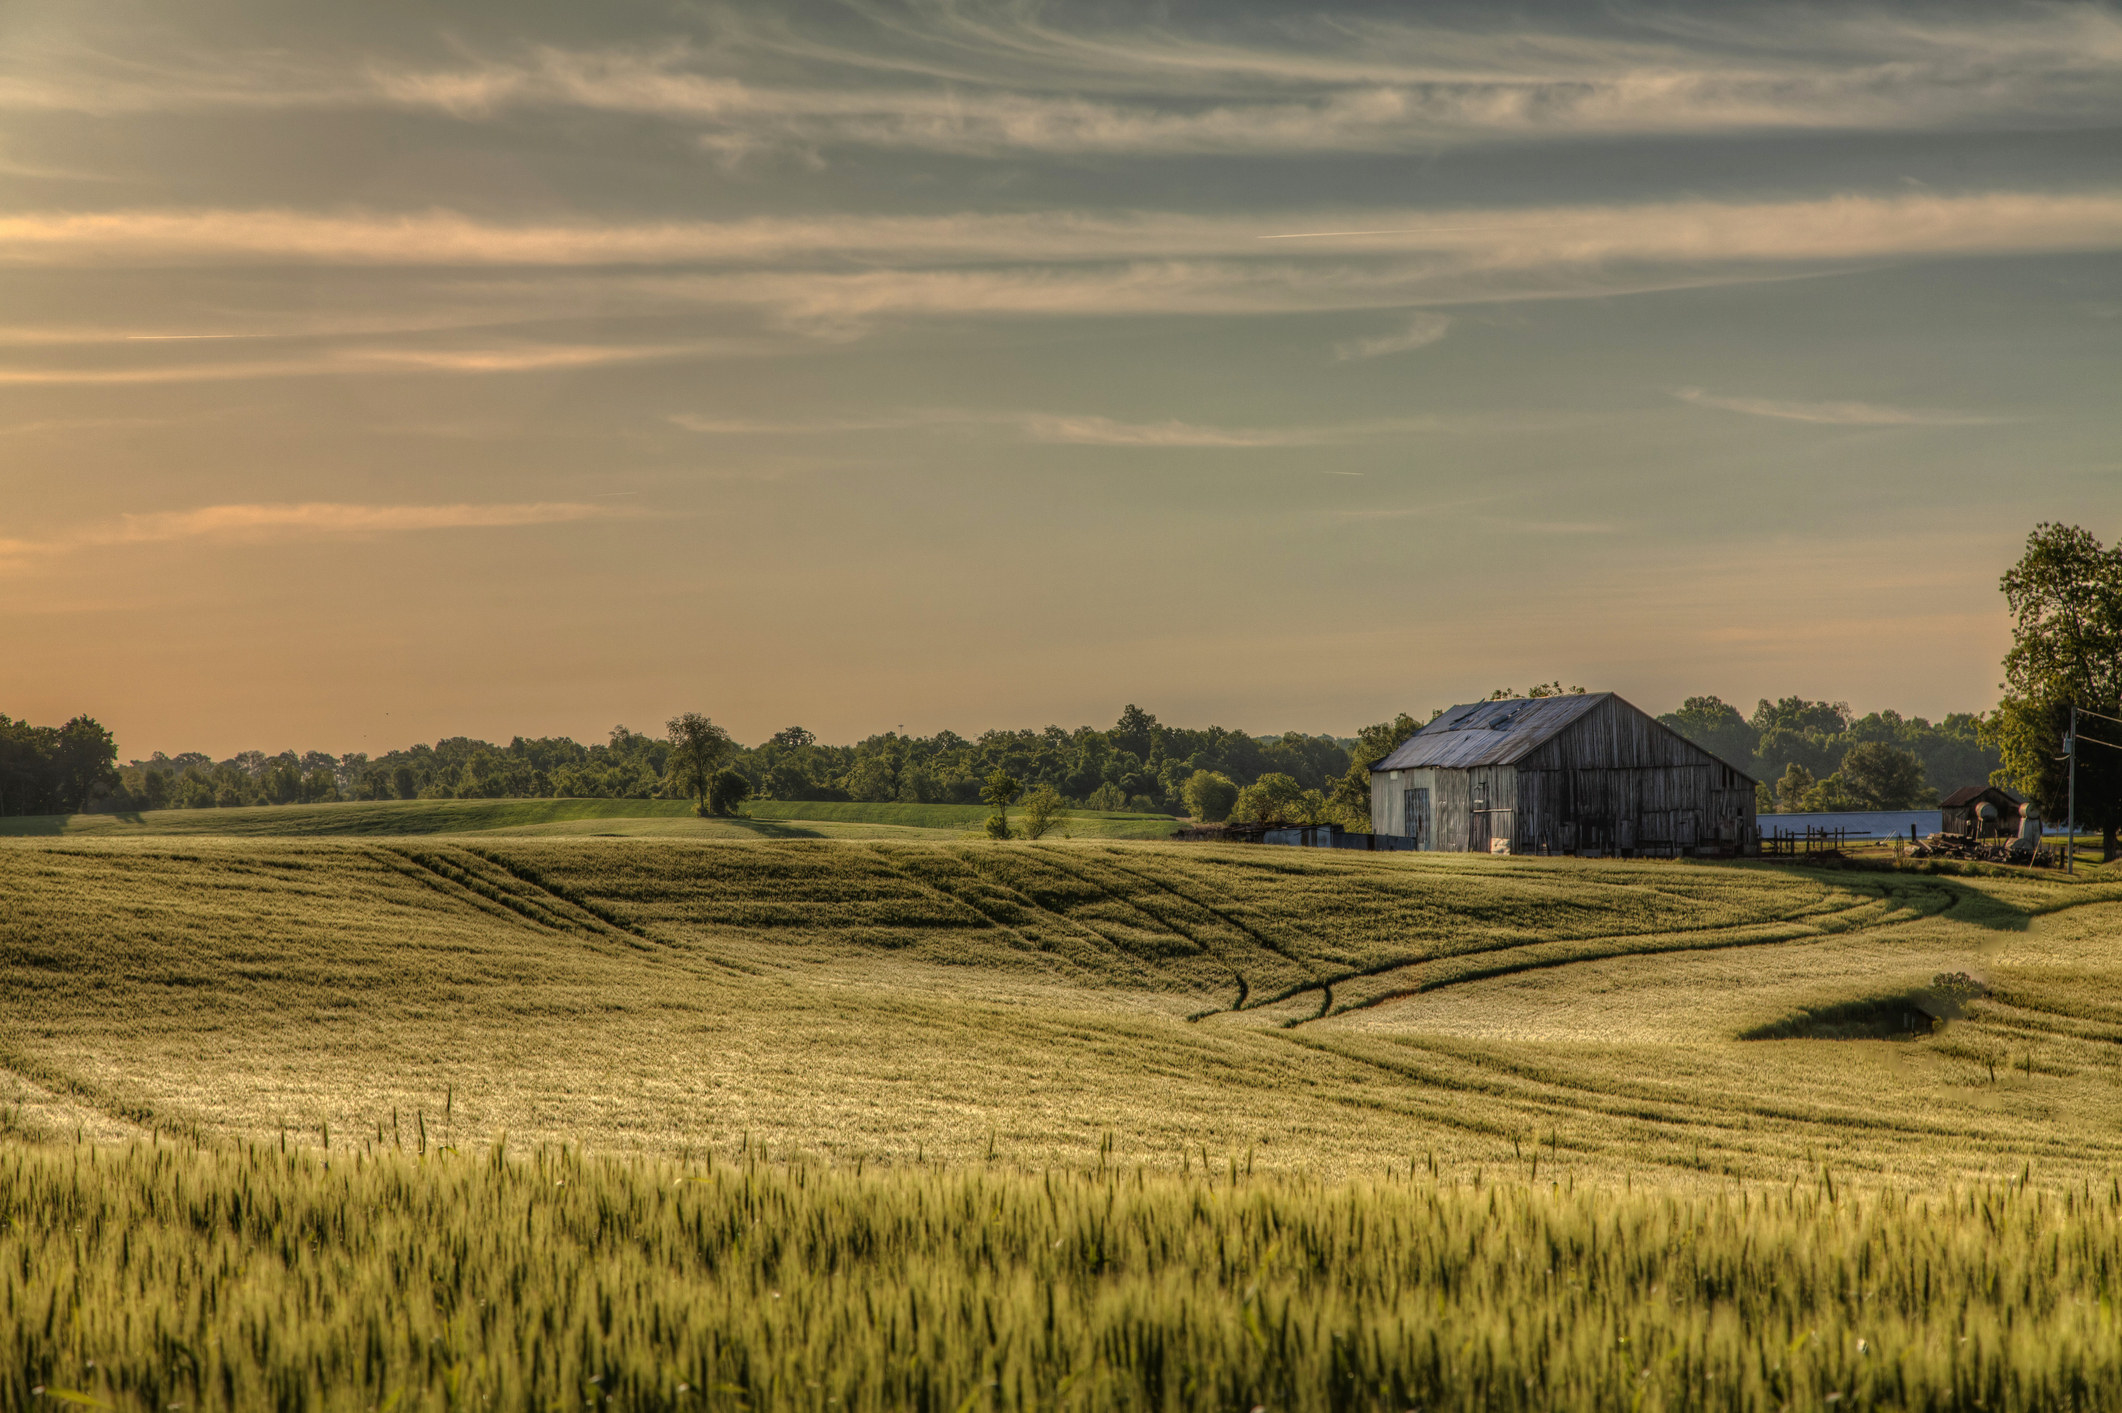 A wheat farm in midwestern USA.